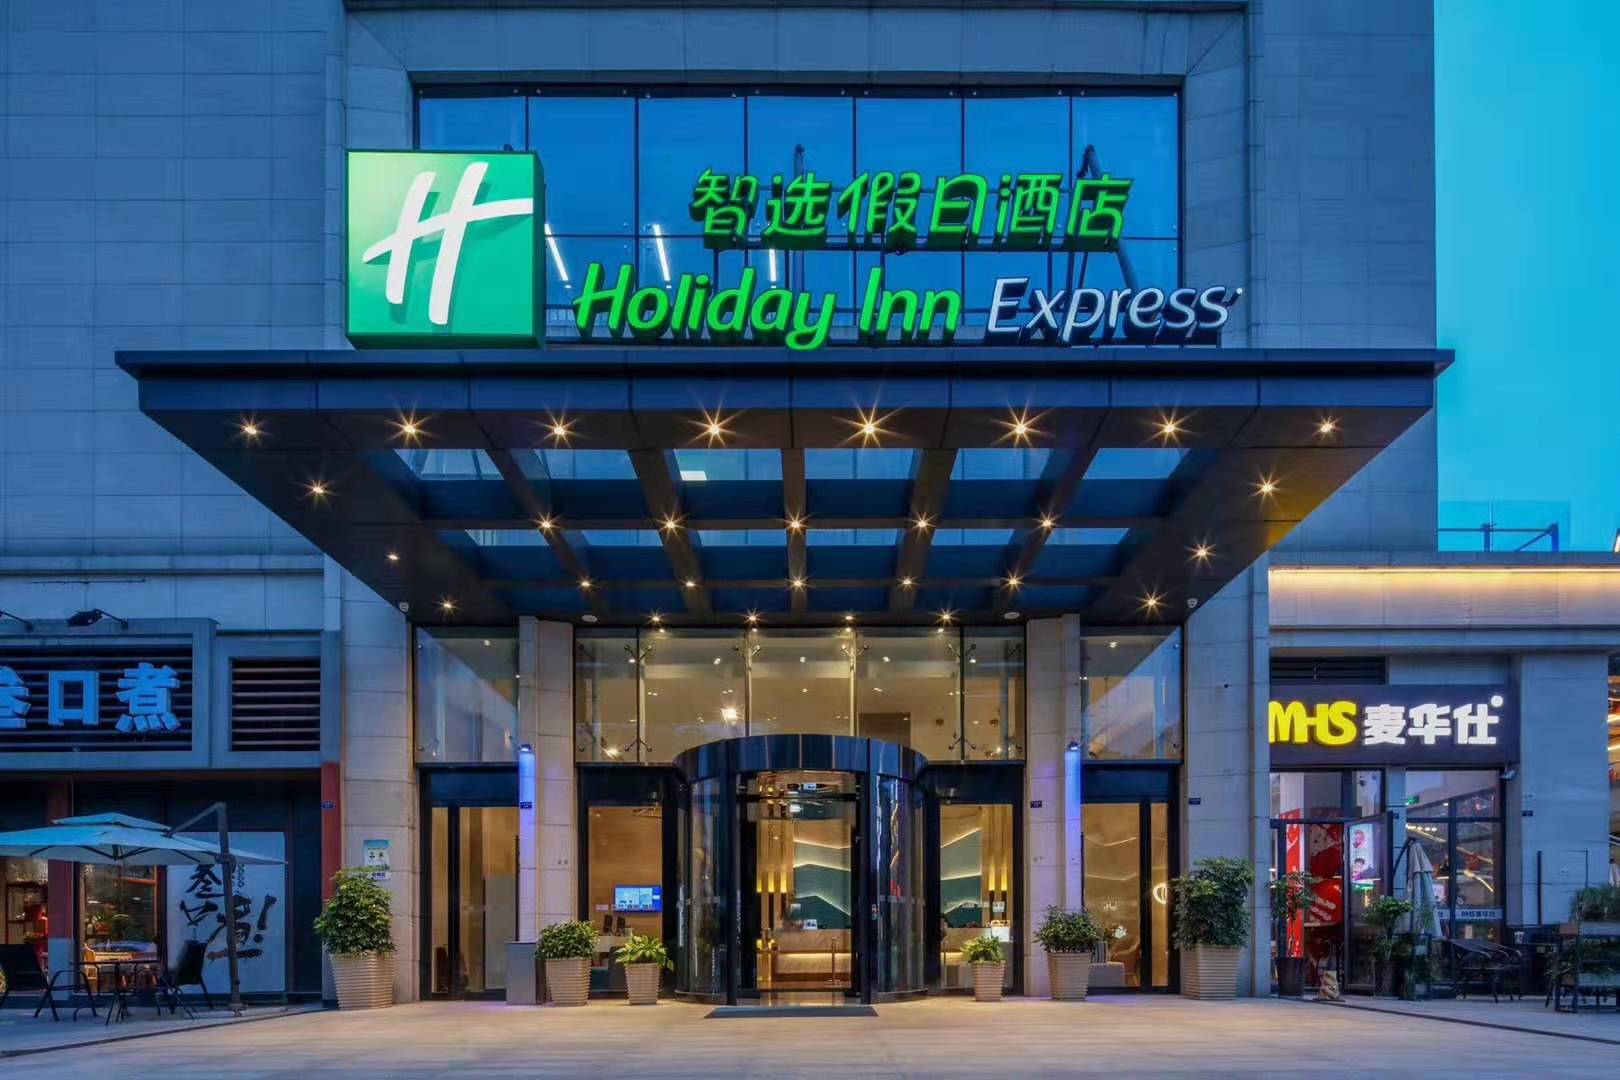 Holiday Inn Express 贵安云谷智选假日酒店 地图和驾车路线